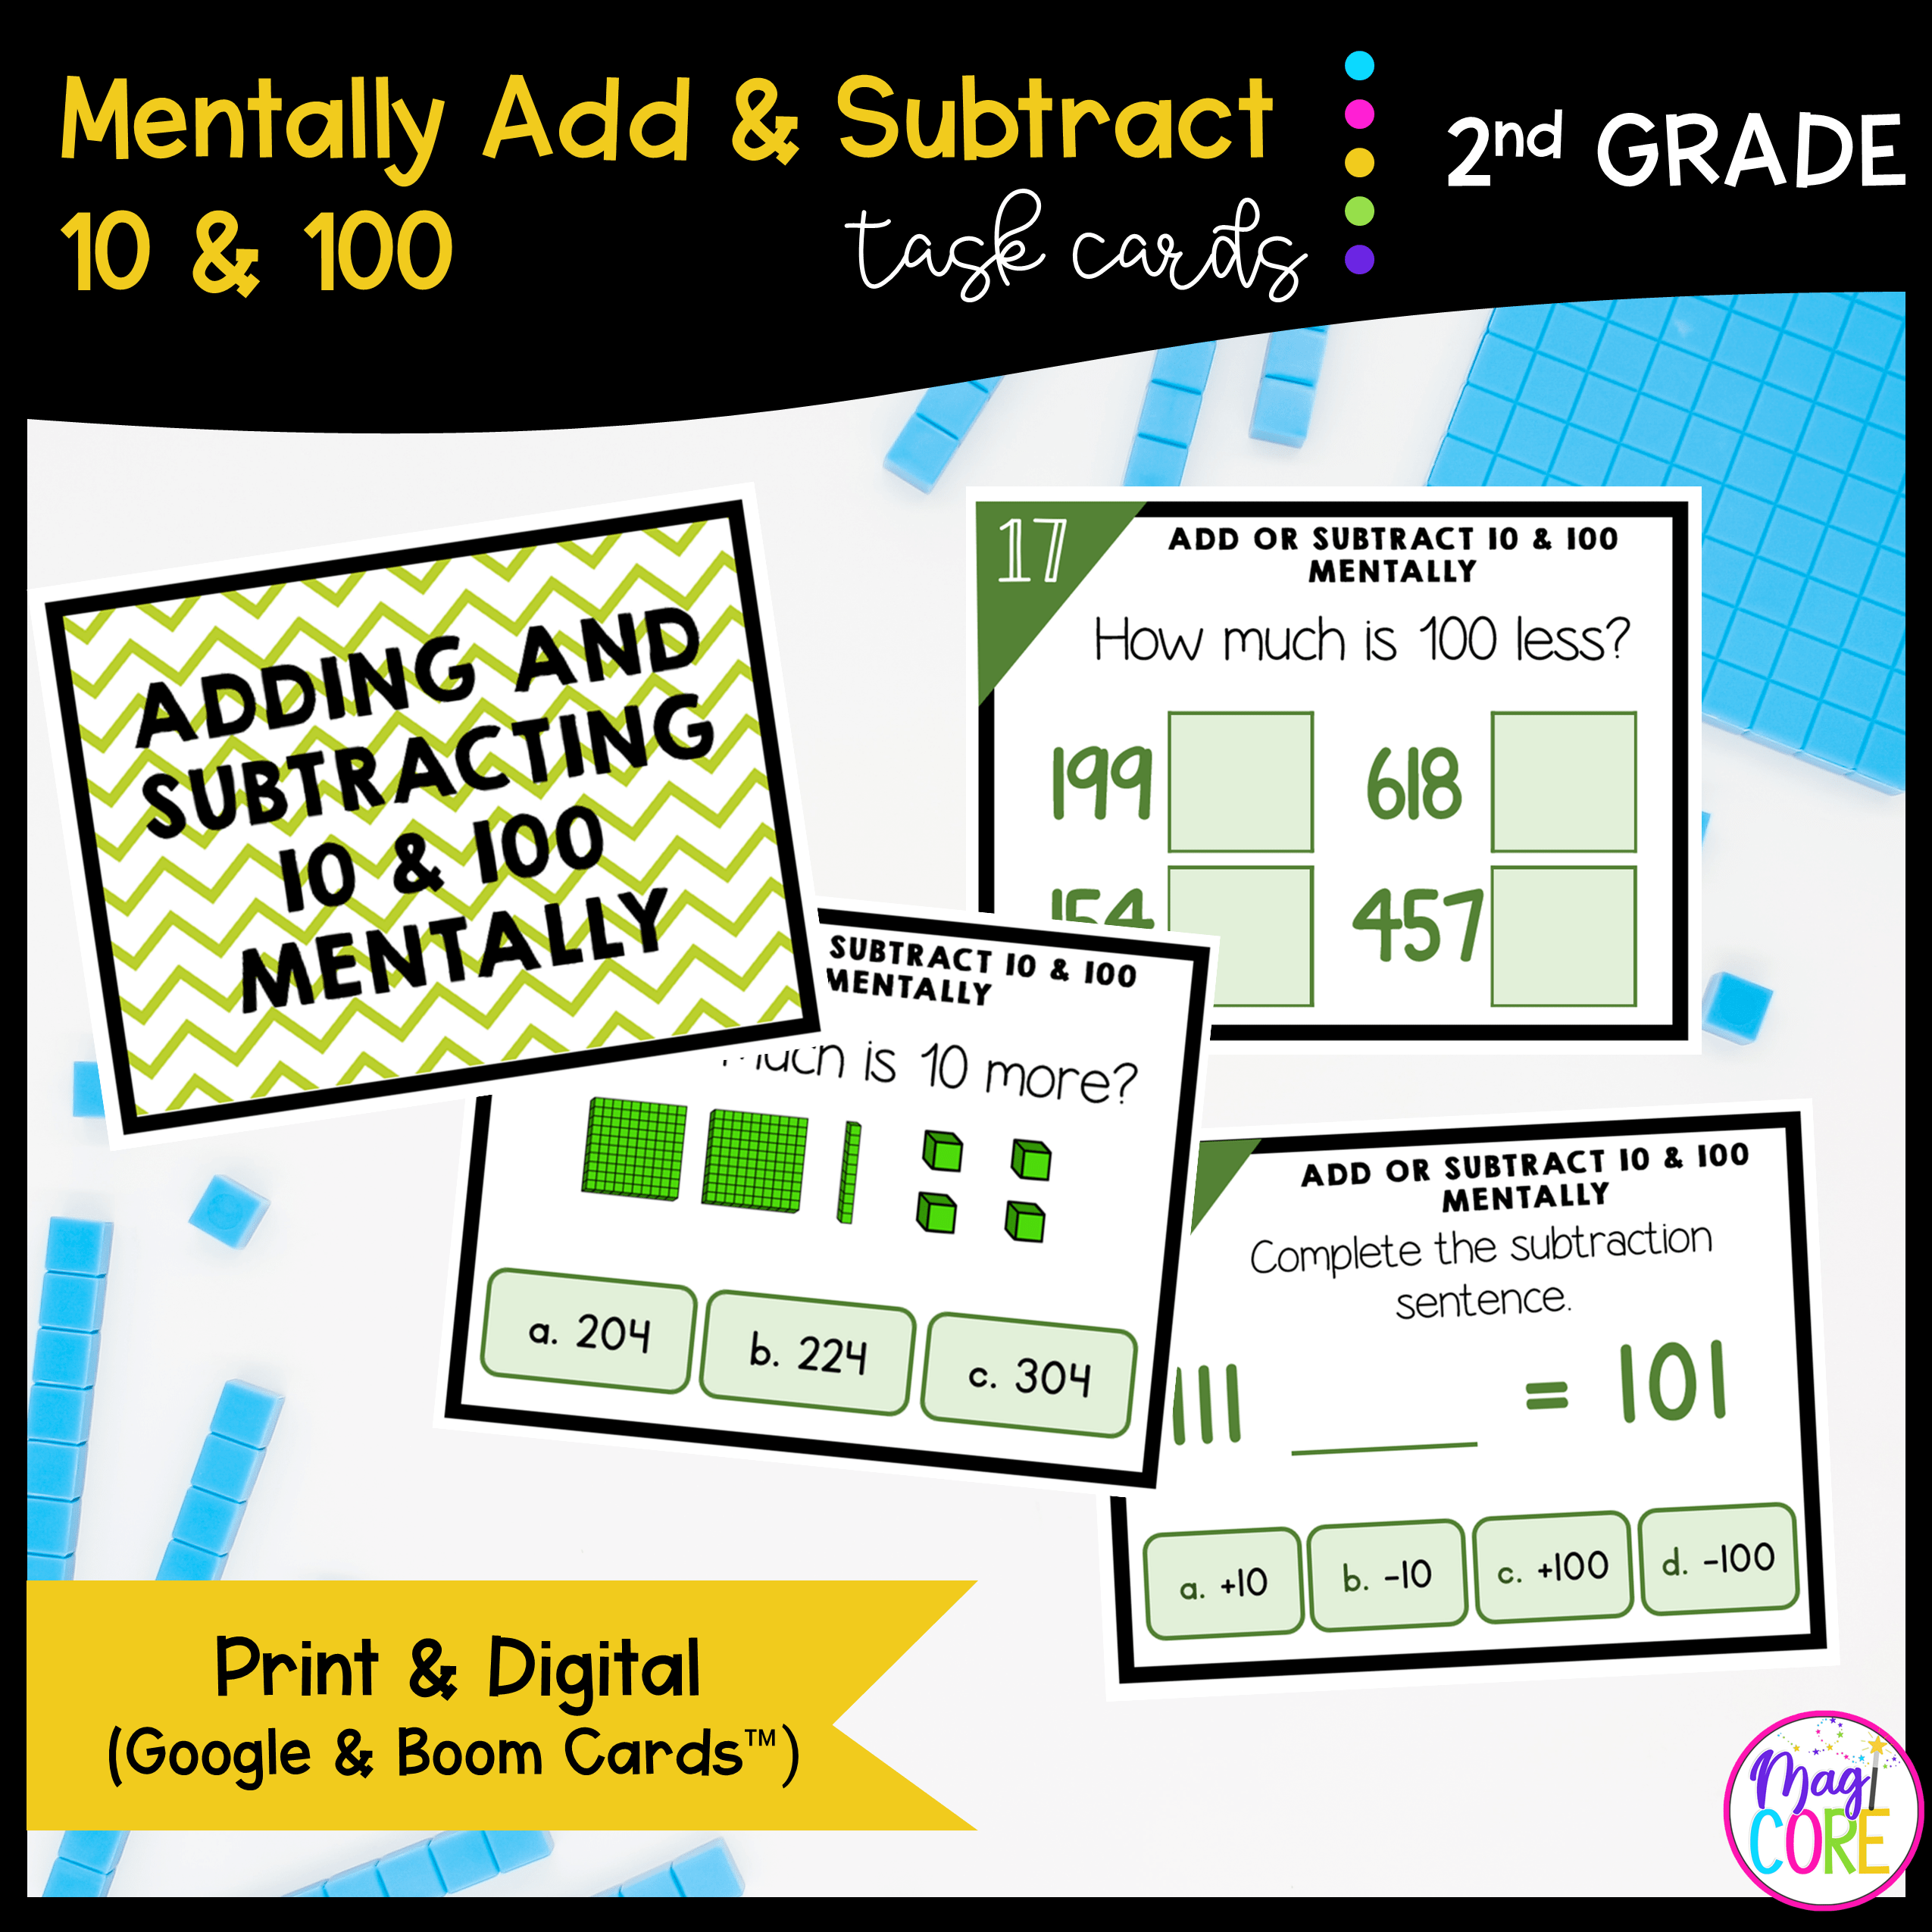 Add & Subtract 10 & 100 - 2nd Grade Task Cards - Print & Digital - 2.NBT.B.8